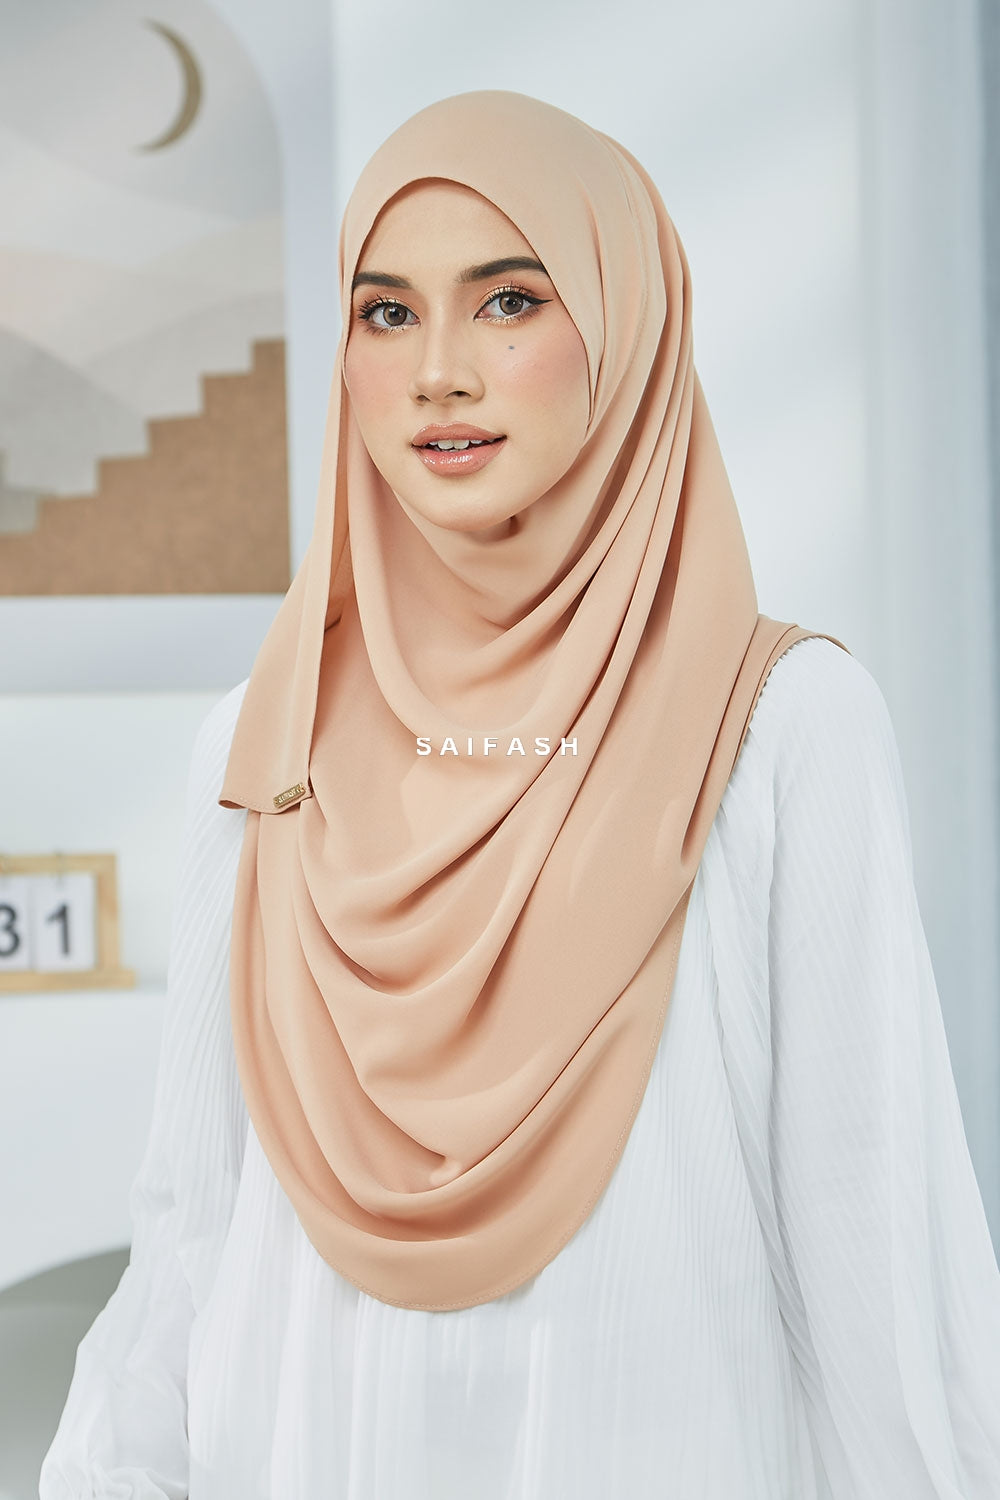 Aralyn Babes Instant Hijab in Milk Tea